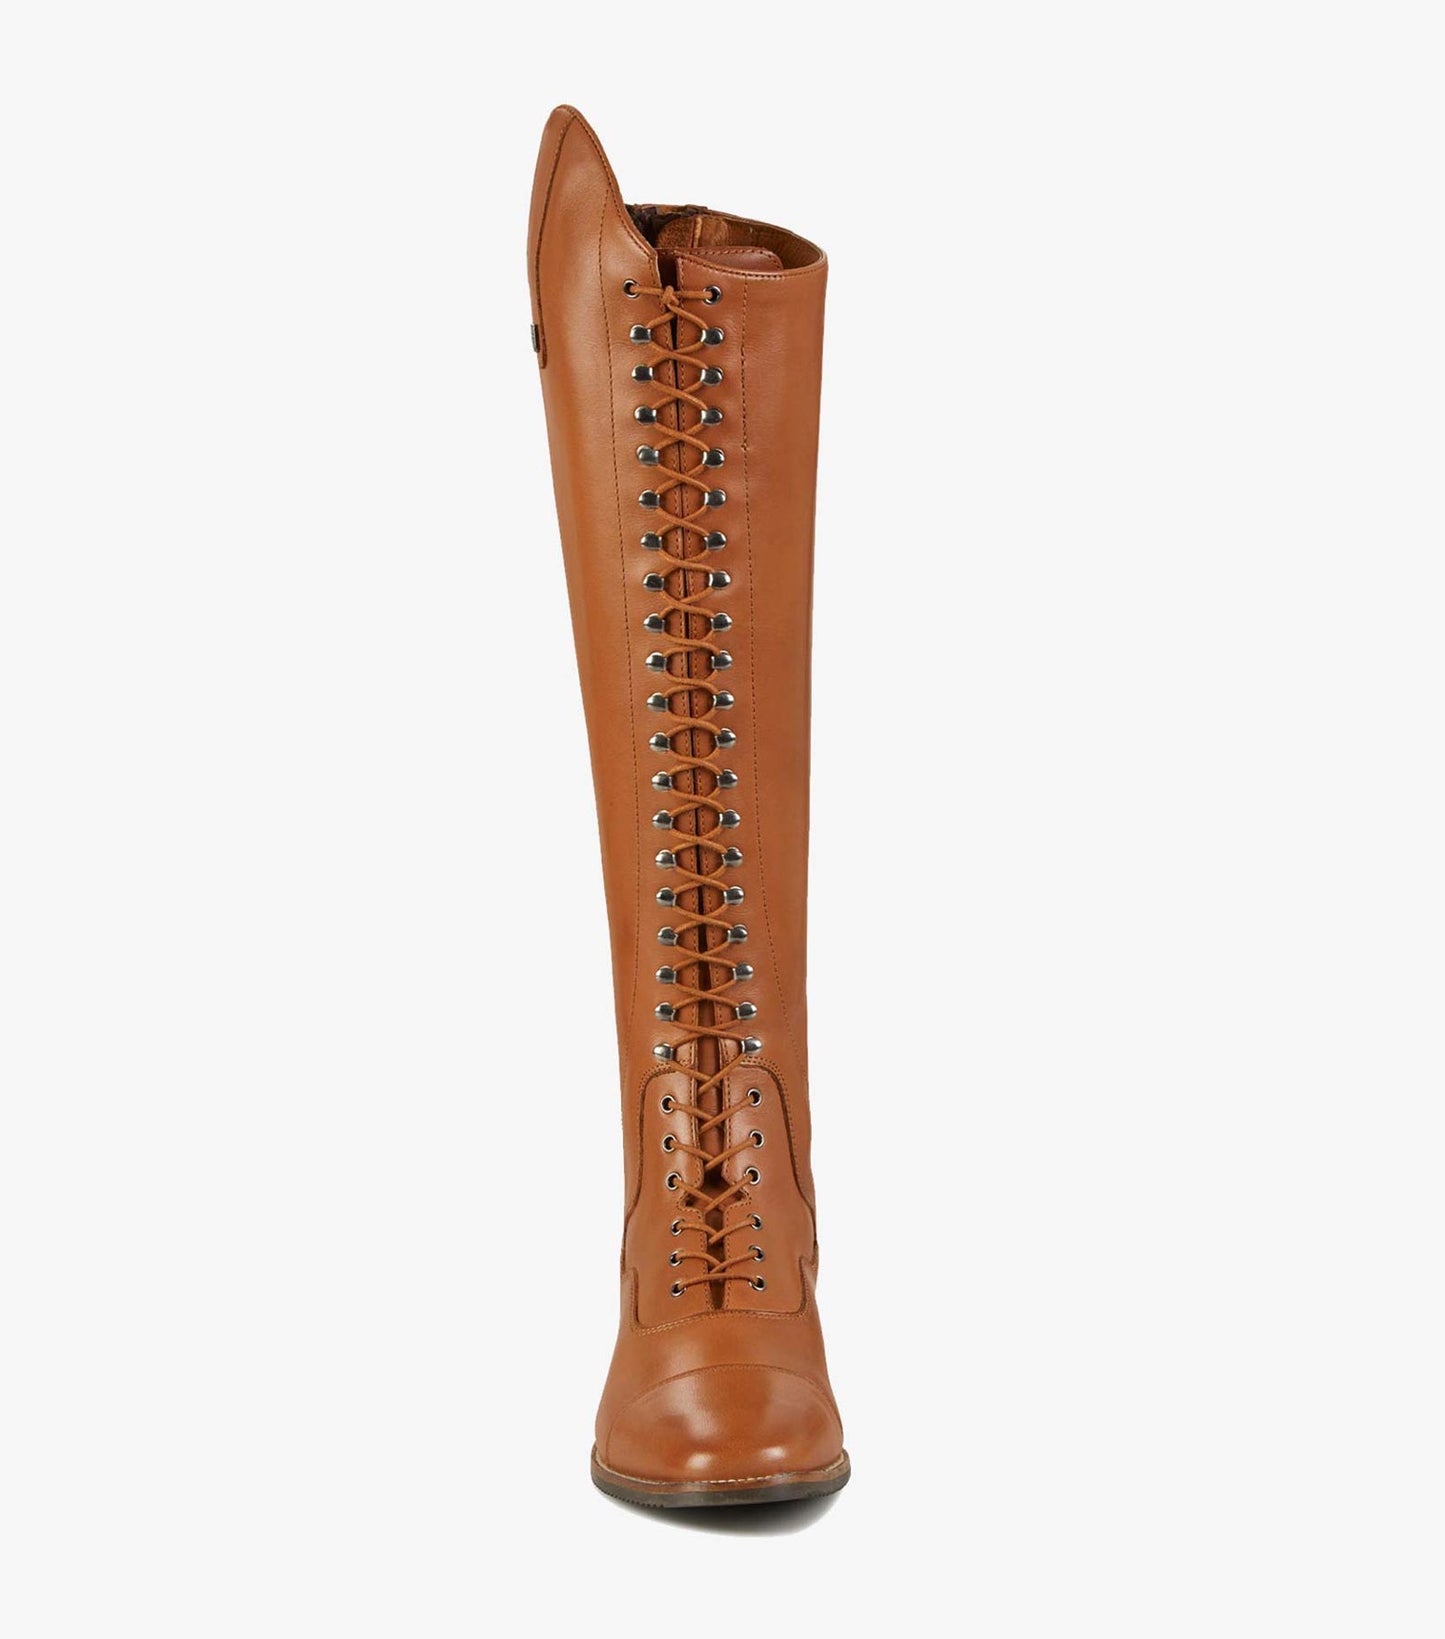 Premier Equine Maurizia Ladies Lace Front Tall Leather Riding Boots - Cognac